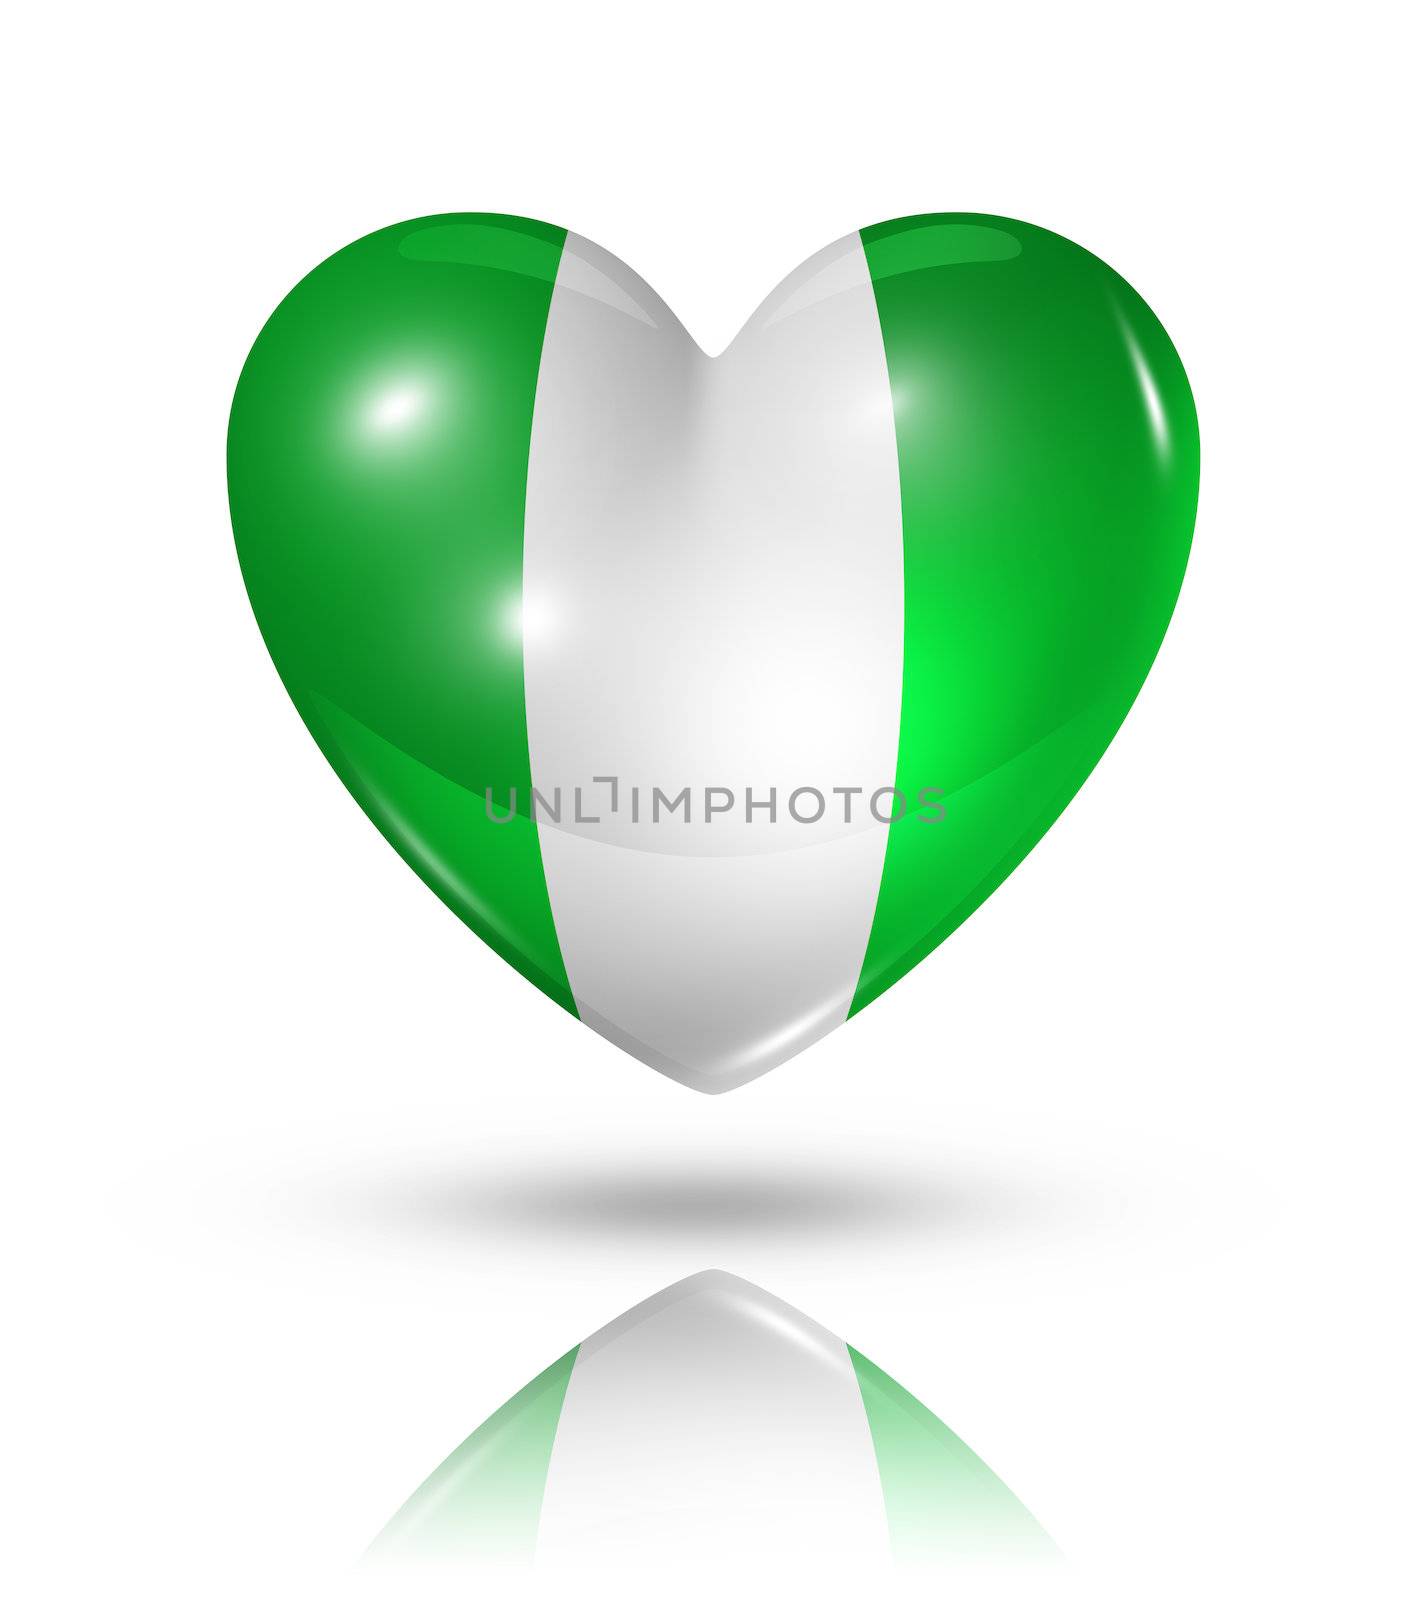 Love Nigeria, heart flag icon by daboost